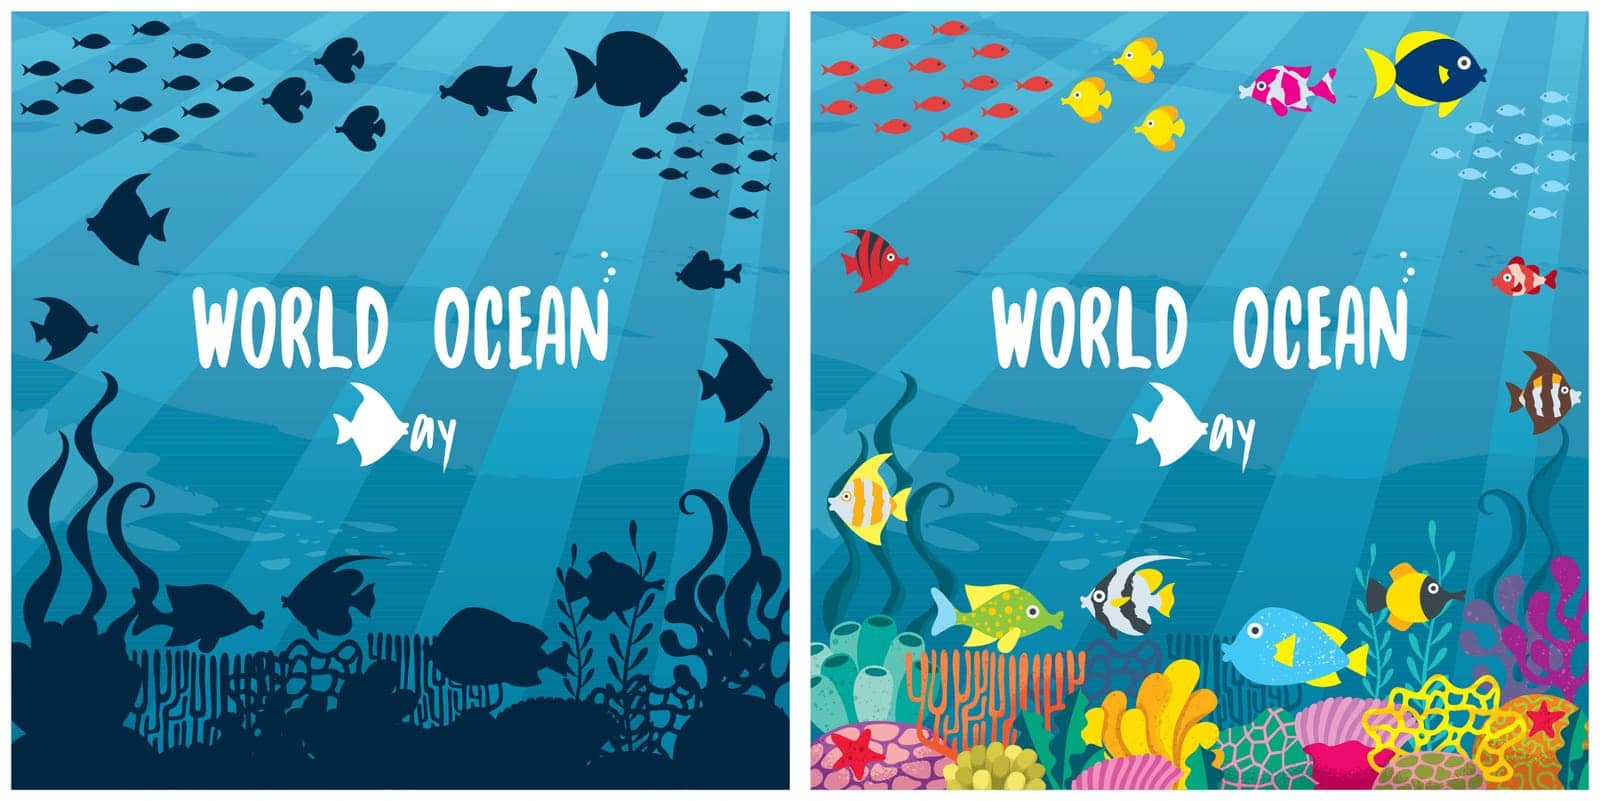 World Ocean Day by Malchev